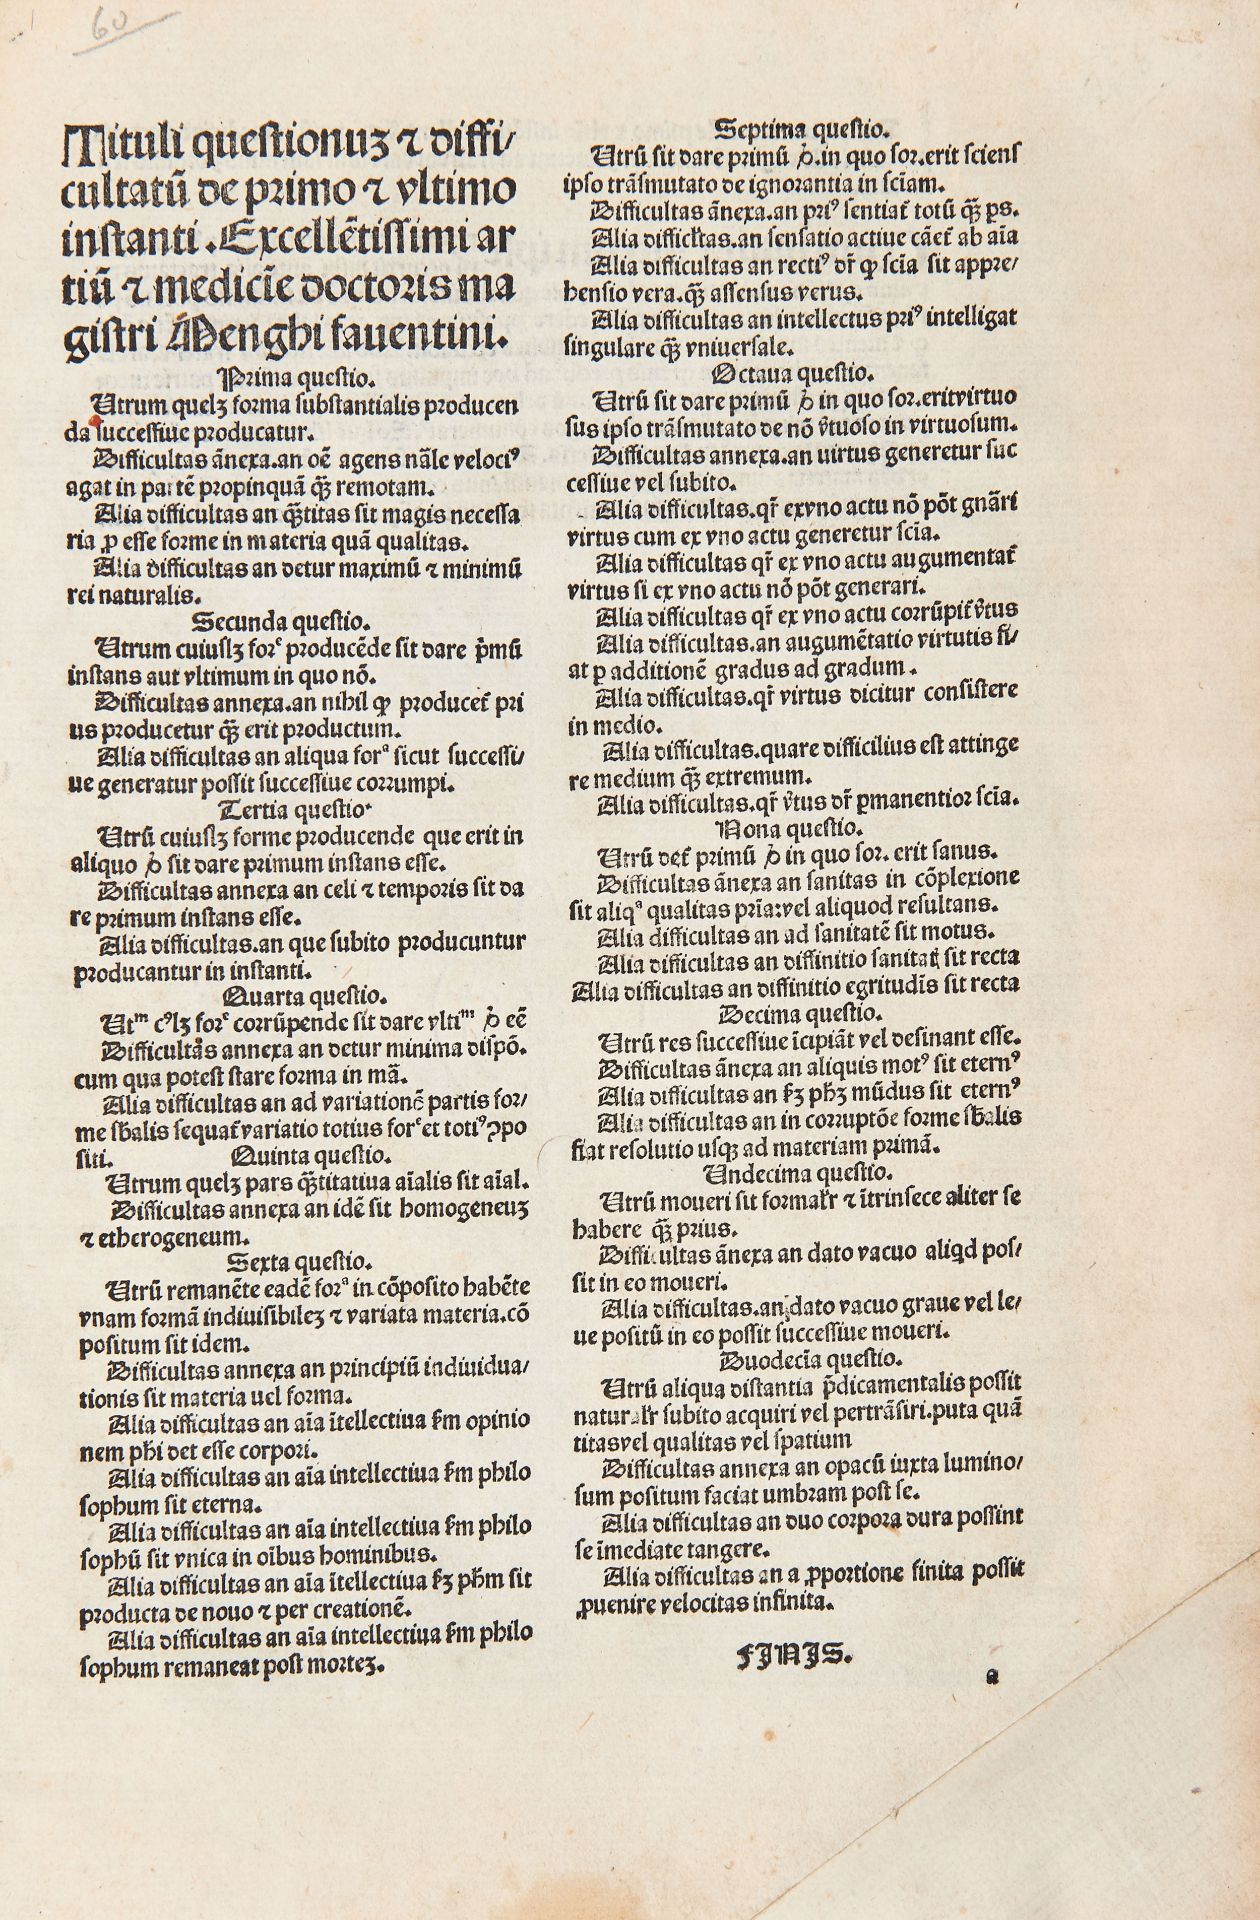 BIANCHELLI, Domenico (1440-1520). Tituli questionum & difficultatum de primo & vltimo instanti.